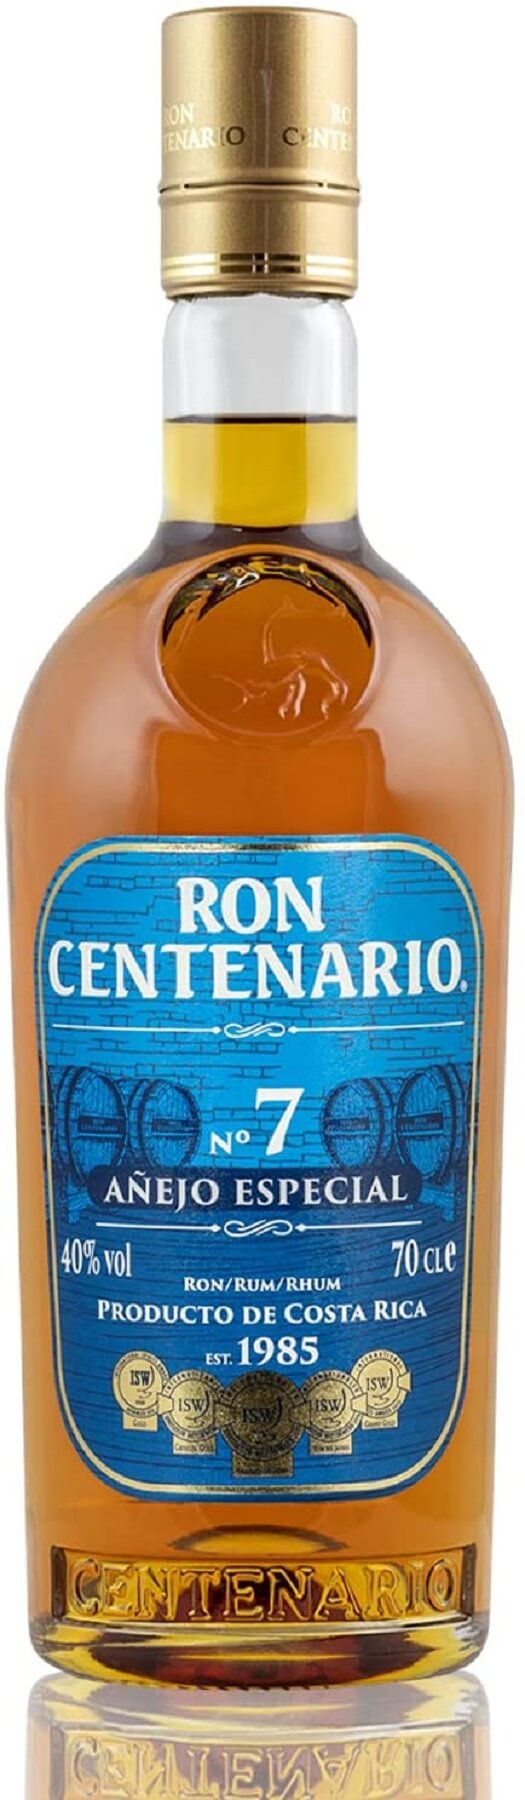 Jahre Rum Anejo 0,7 Especial Centenario Liter 7 Ron